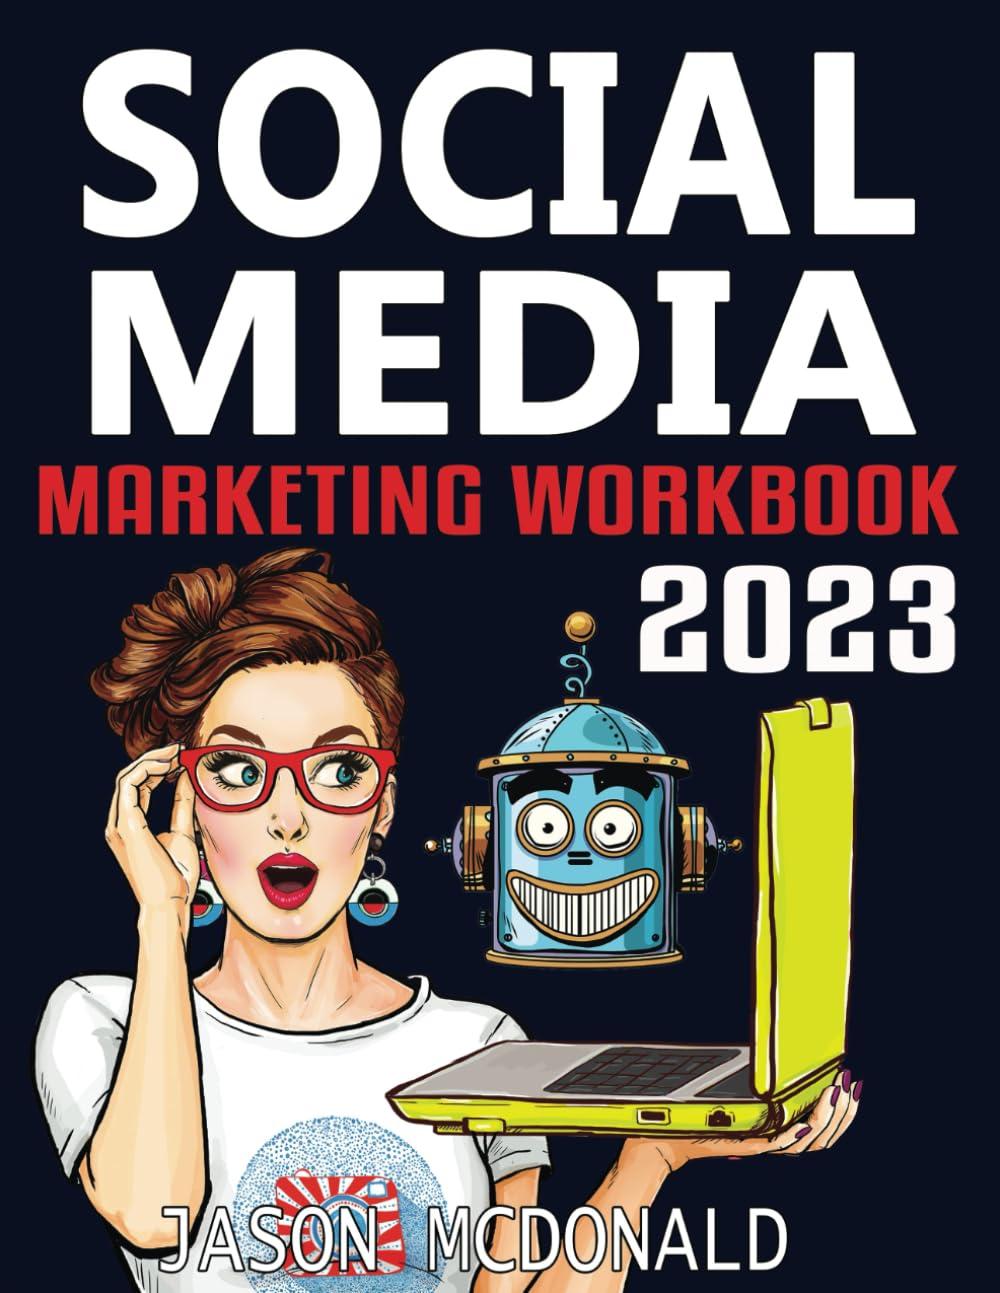 social media marketing workbook 2023 1st edition jason mcdonald b0bpvyn2zn, 979-8368326504